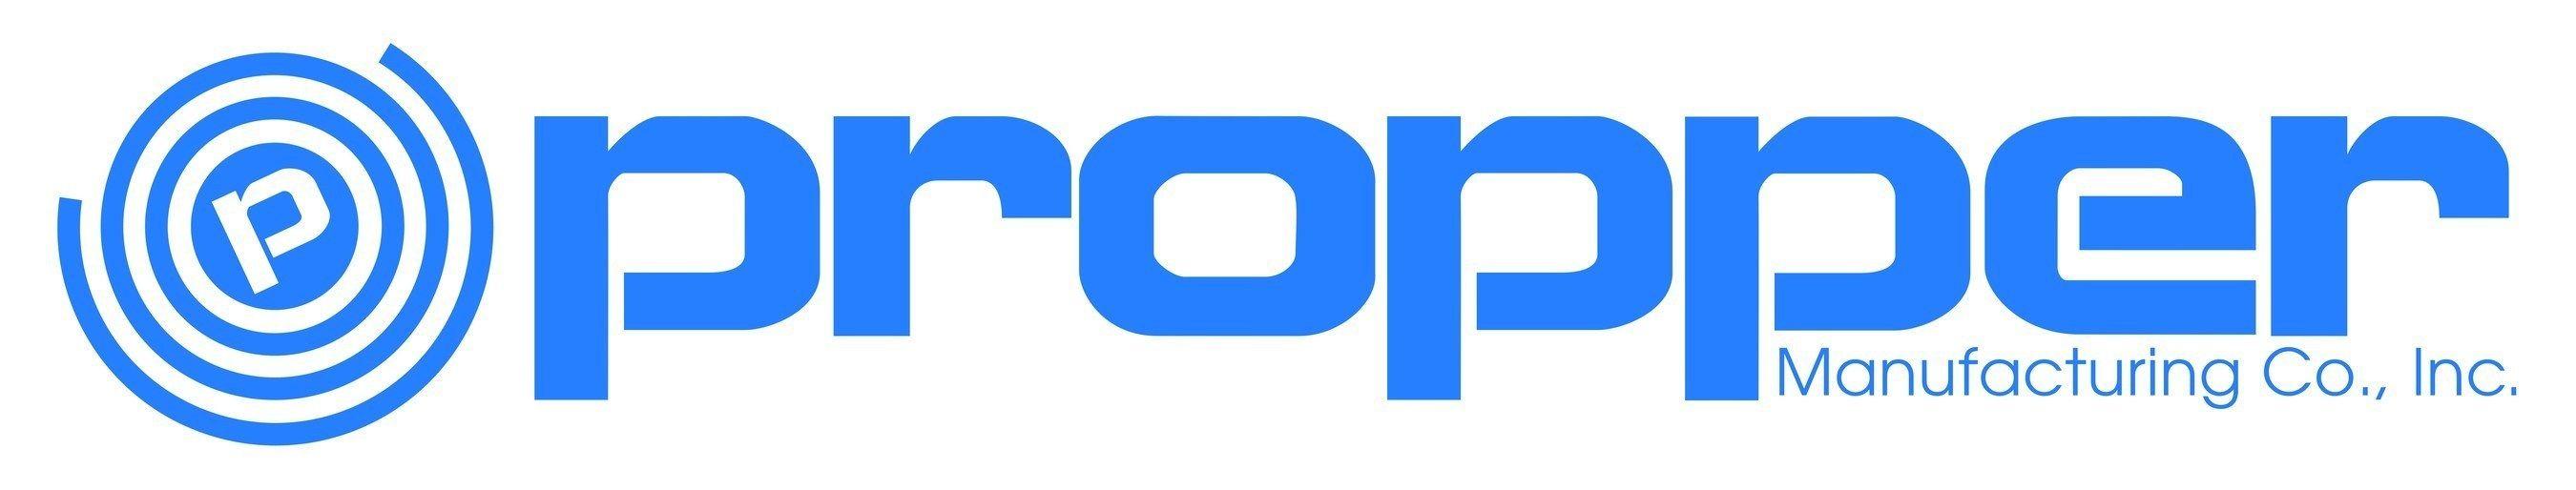 Propper Logo - Propper Manufacturing Company Announces New Bowie Dick Sterilizer Test